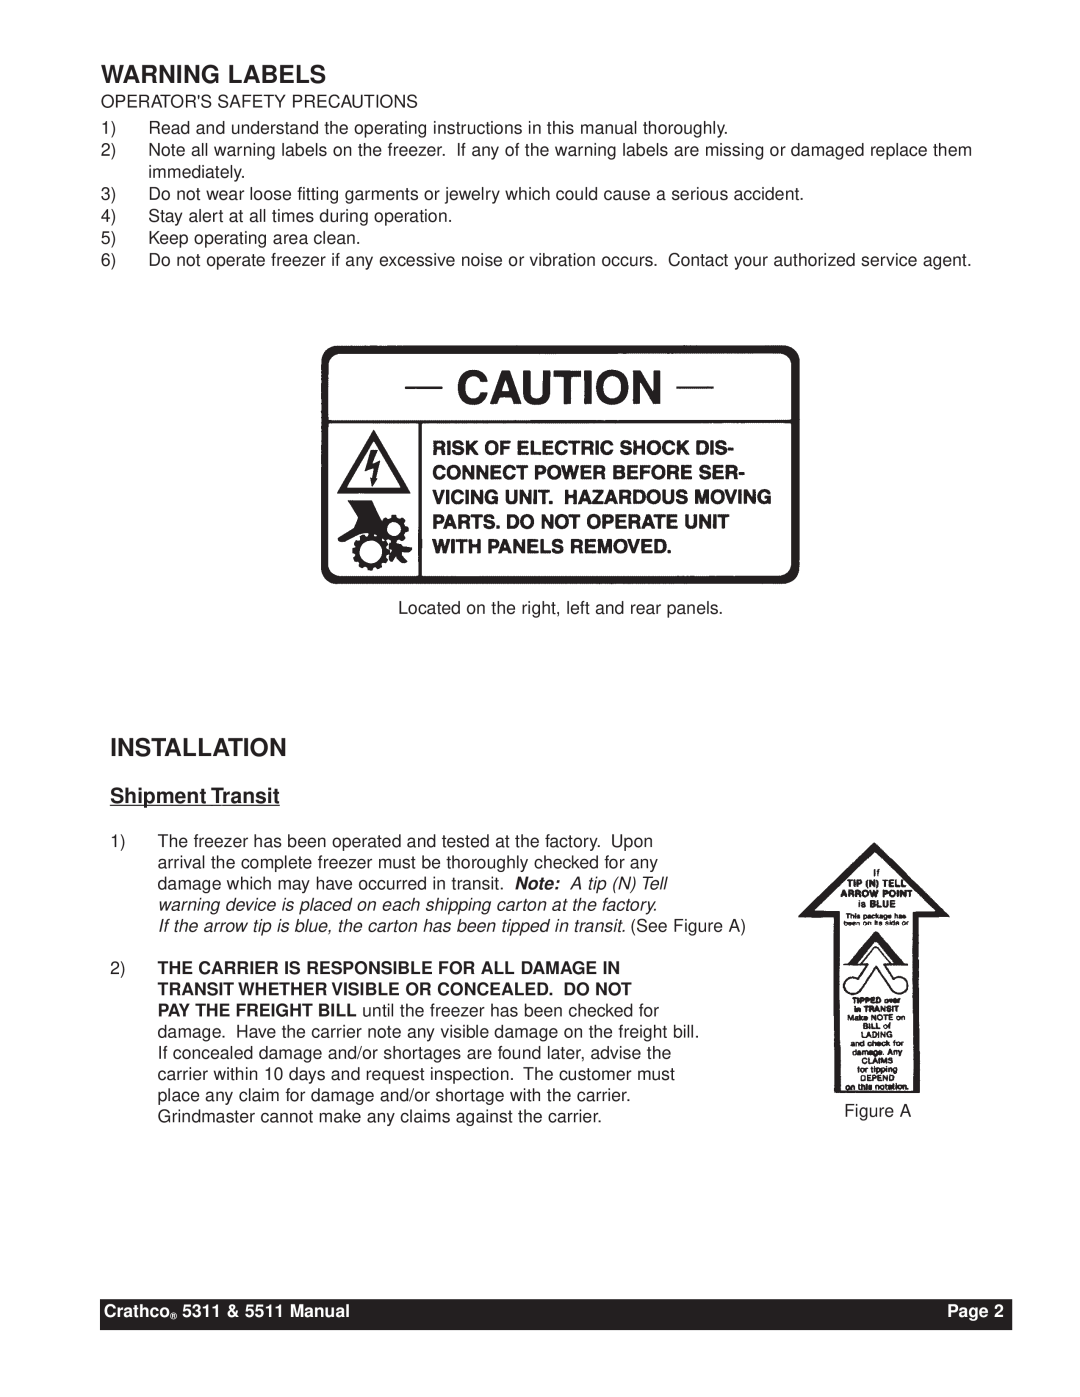 Grindmaster instruction manual Warning Labels, Installation, Shipment Transit, Crathco 5311 & 5511 Manual, Page 